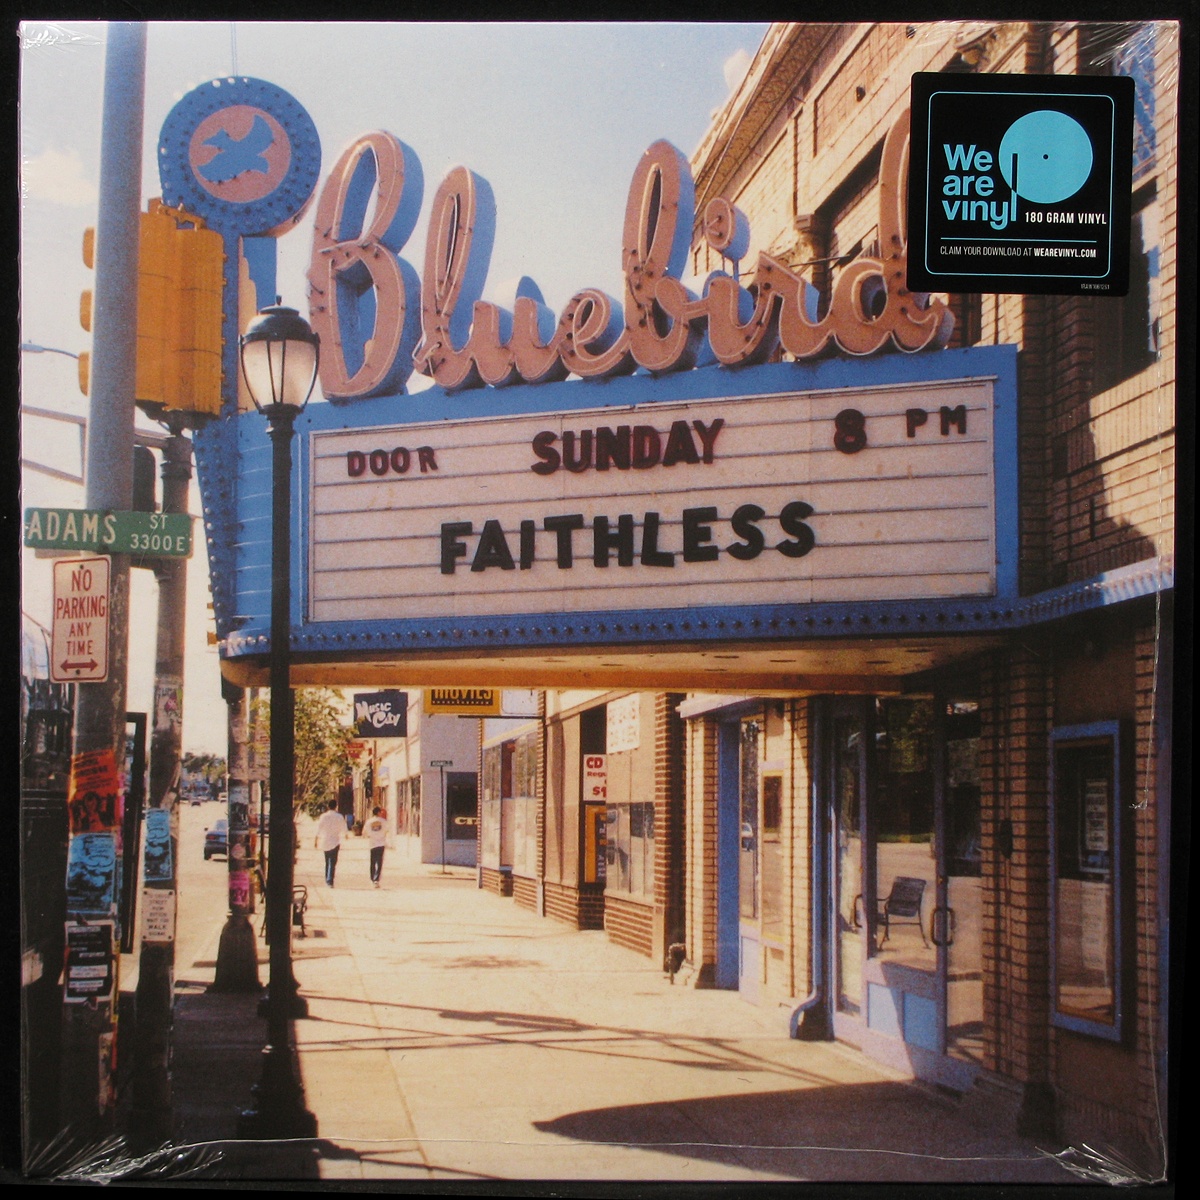 LP Faithless — Sunday 8PM (2LP) фото